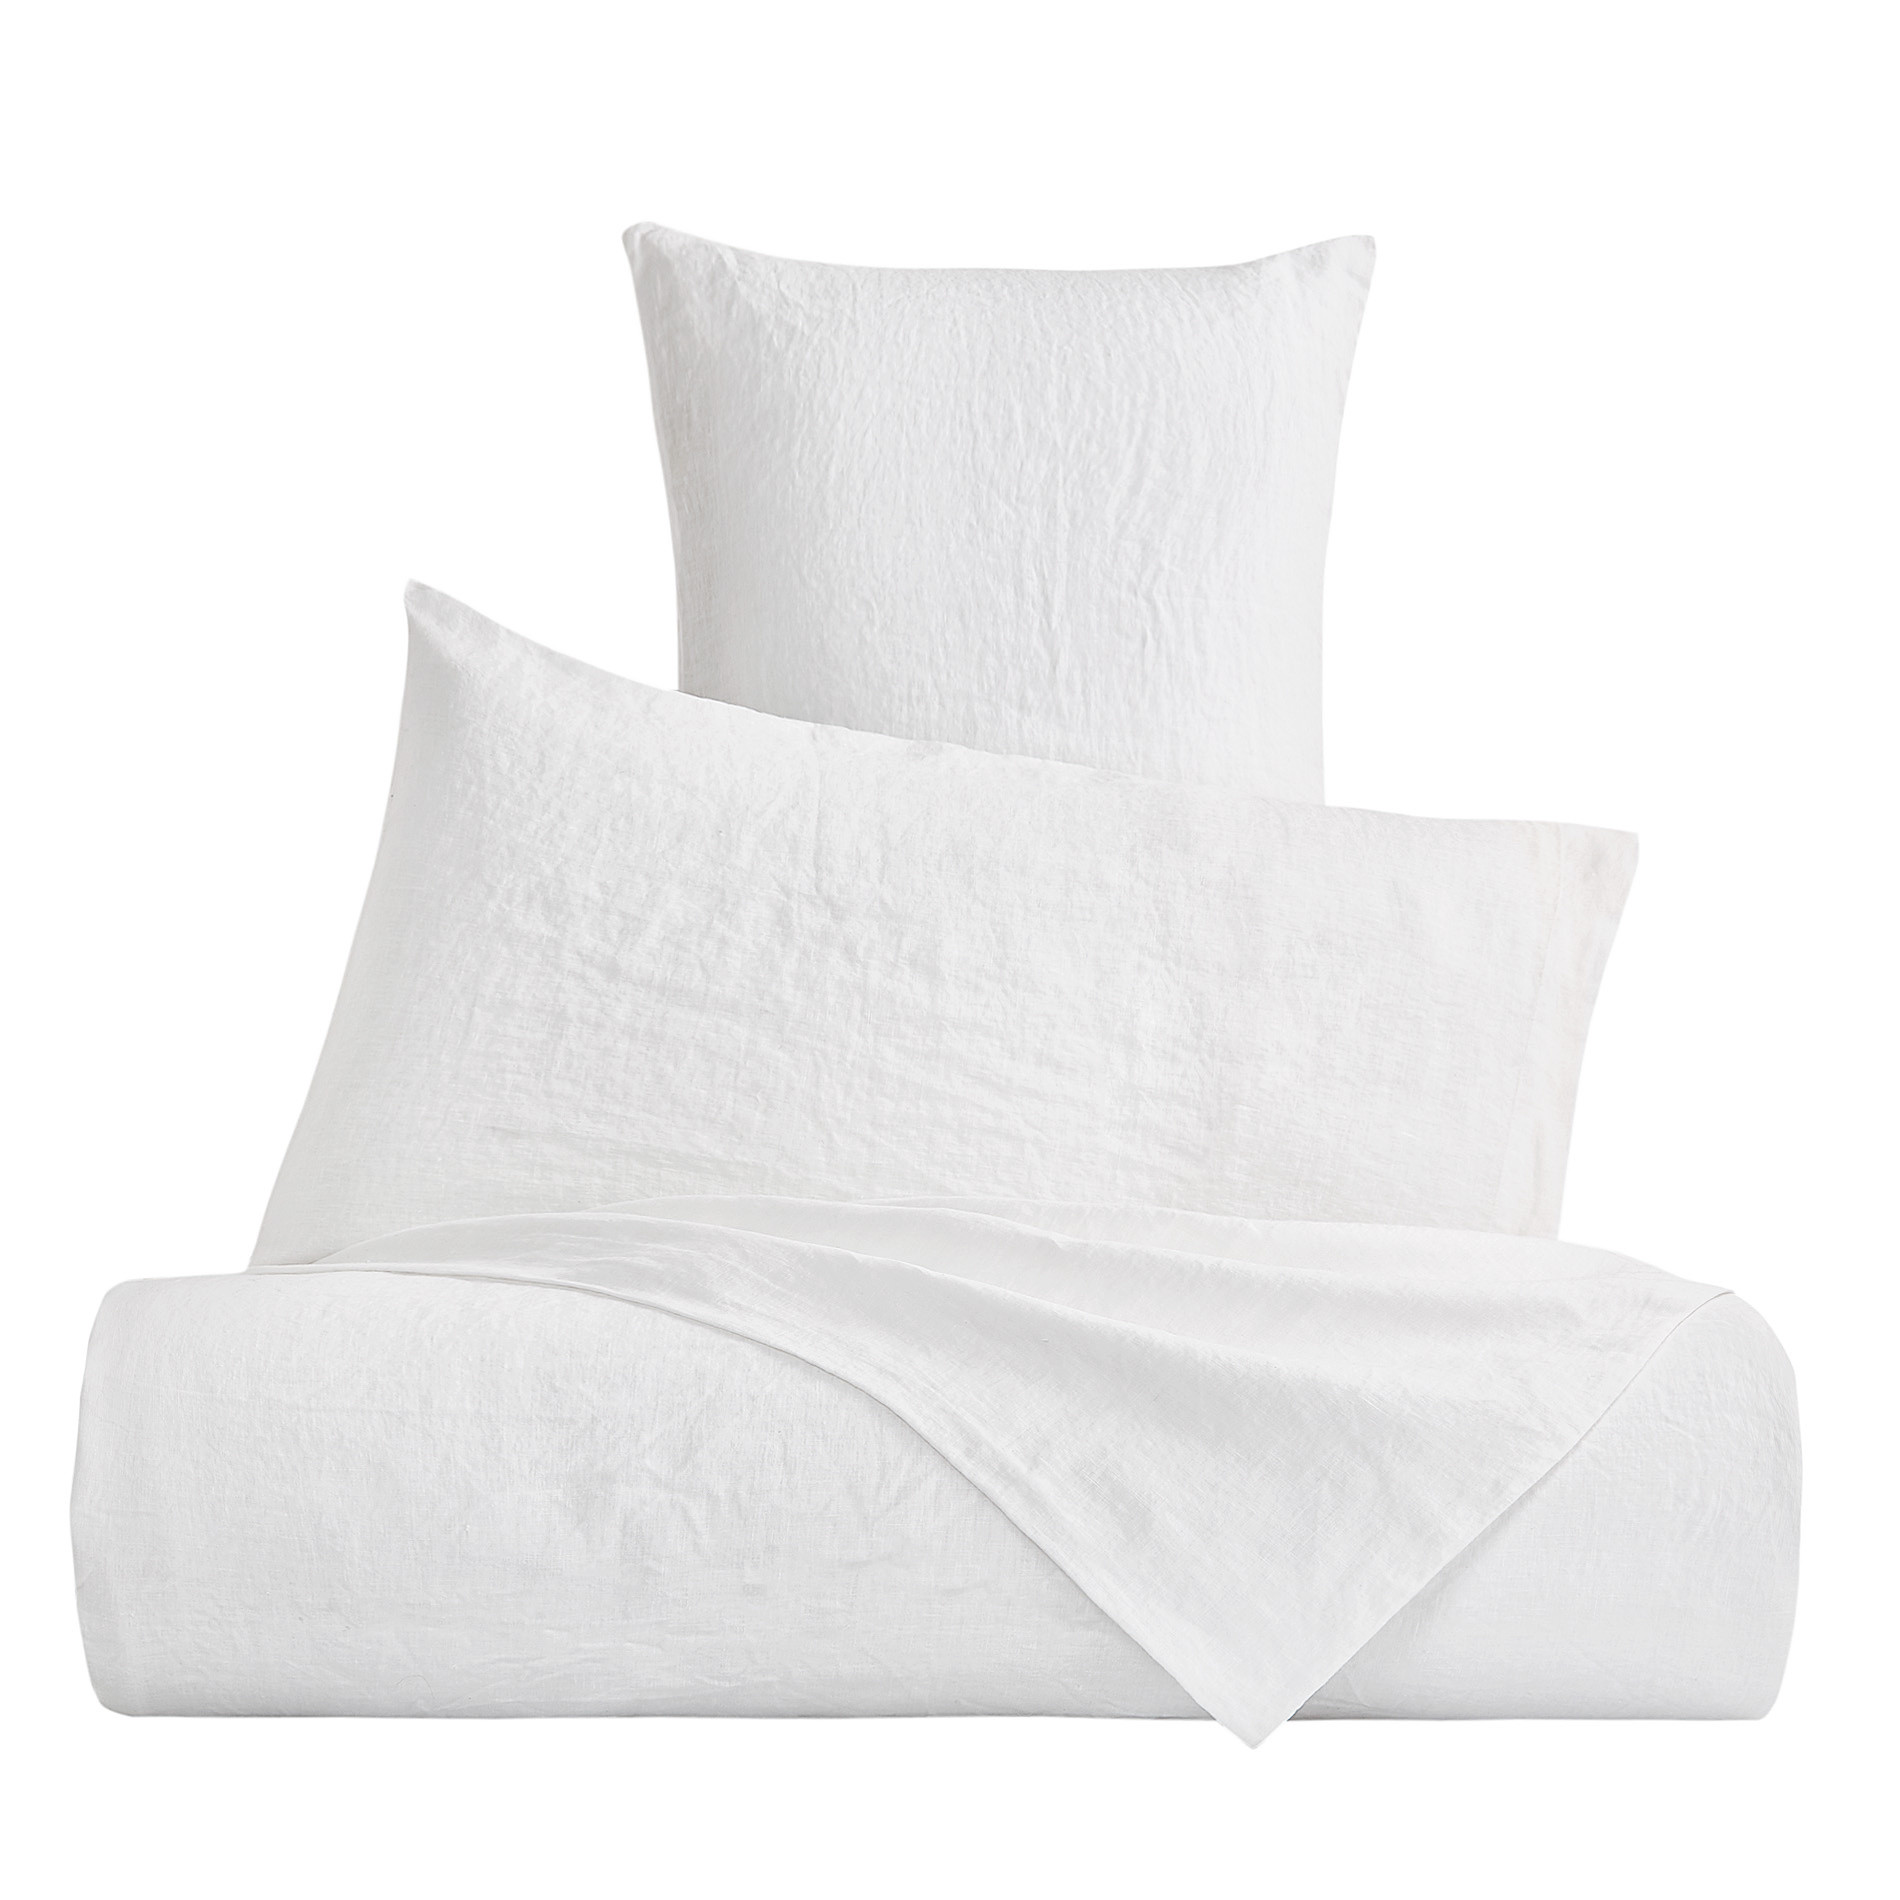 Plain pillowcase in 145 g linen, White 1, large image number 2